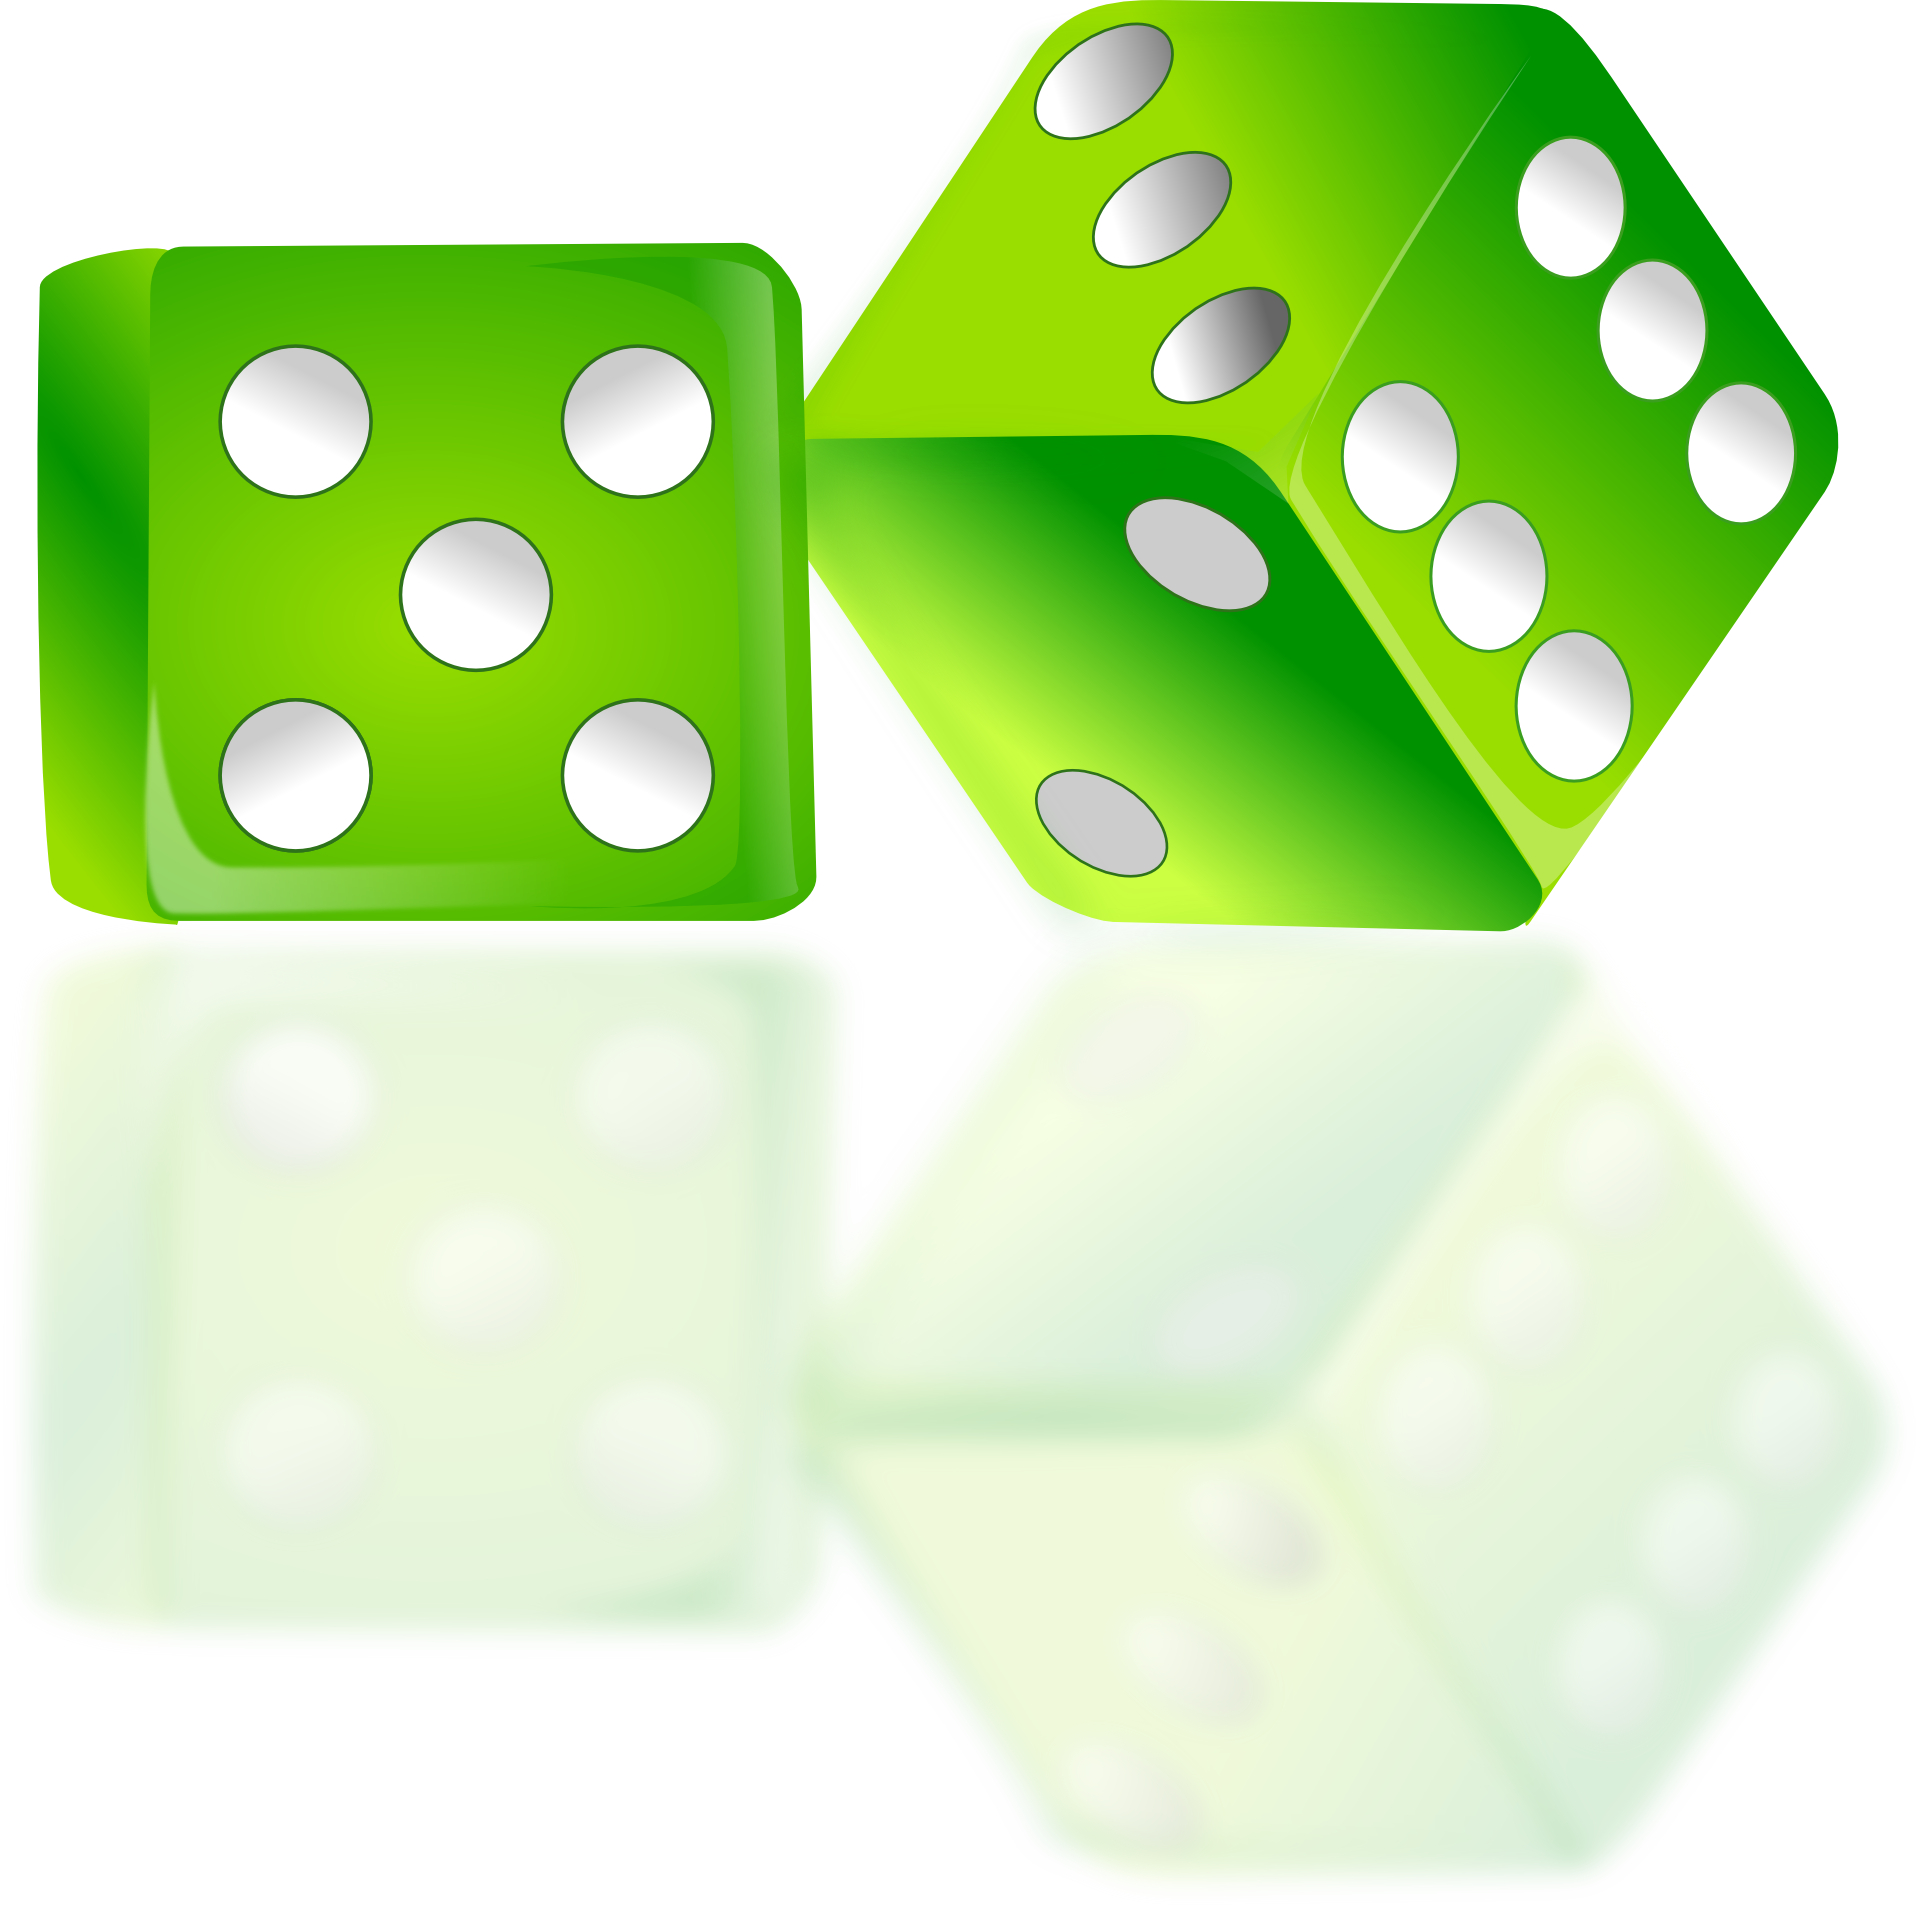 Green dice vector